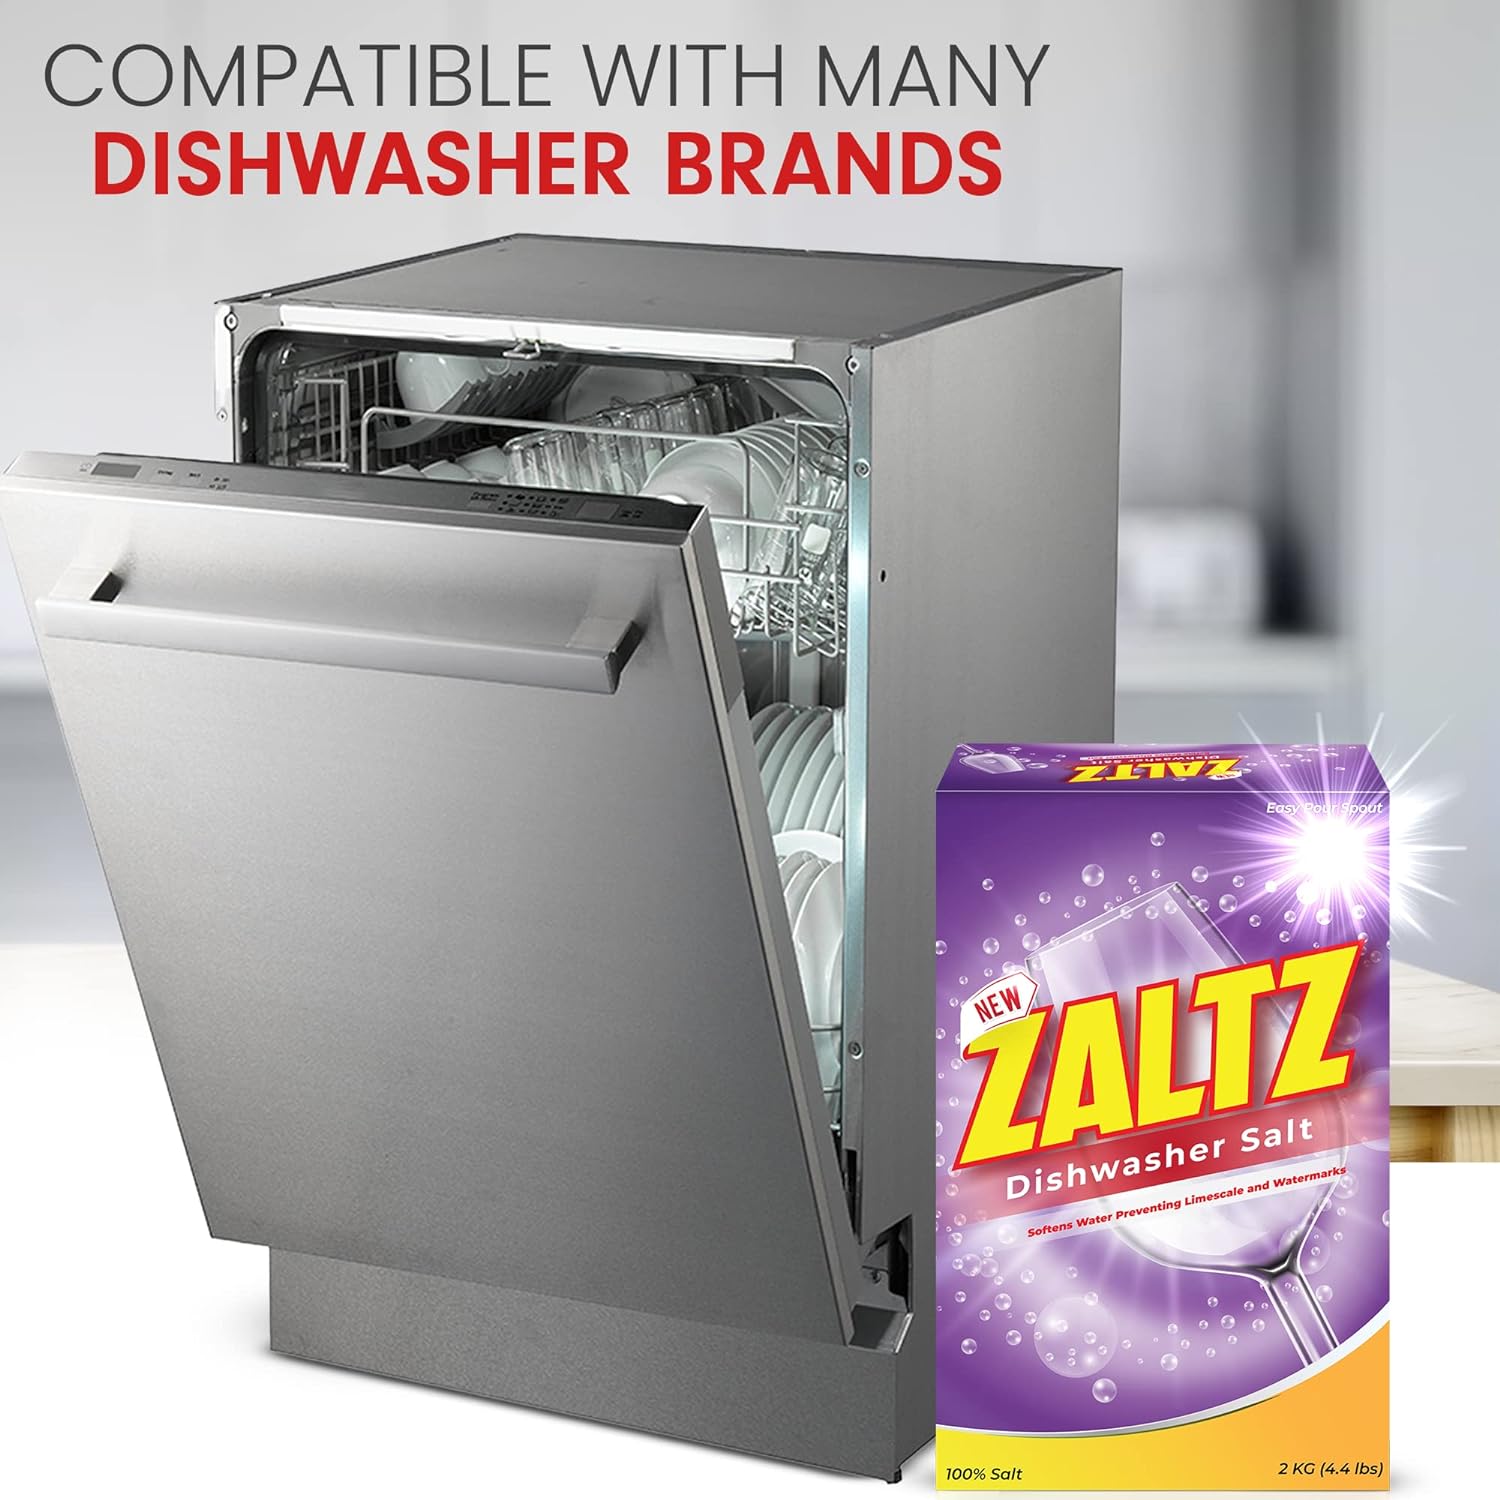 Zaltz Dishwasher Salt - Dishwasher Rinse Aid, Water Softener, Dishwasher Cleaner, Rinse Aid, Easy Pour Spout, Real Salt For Dishwasher, 4.4 lb Box : Health & Household